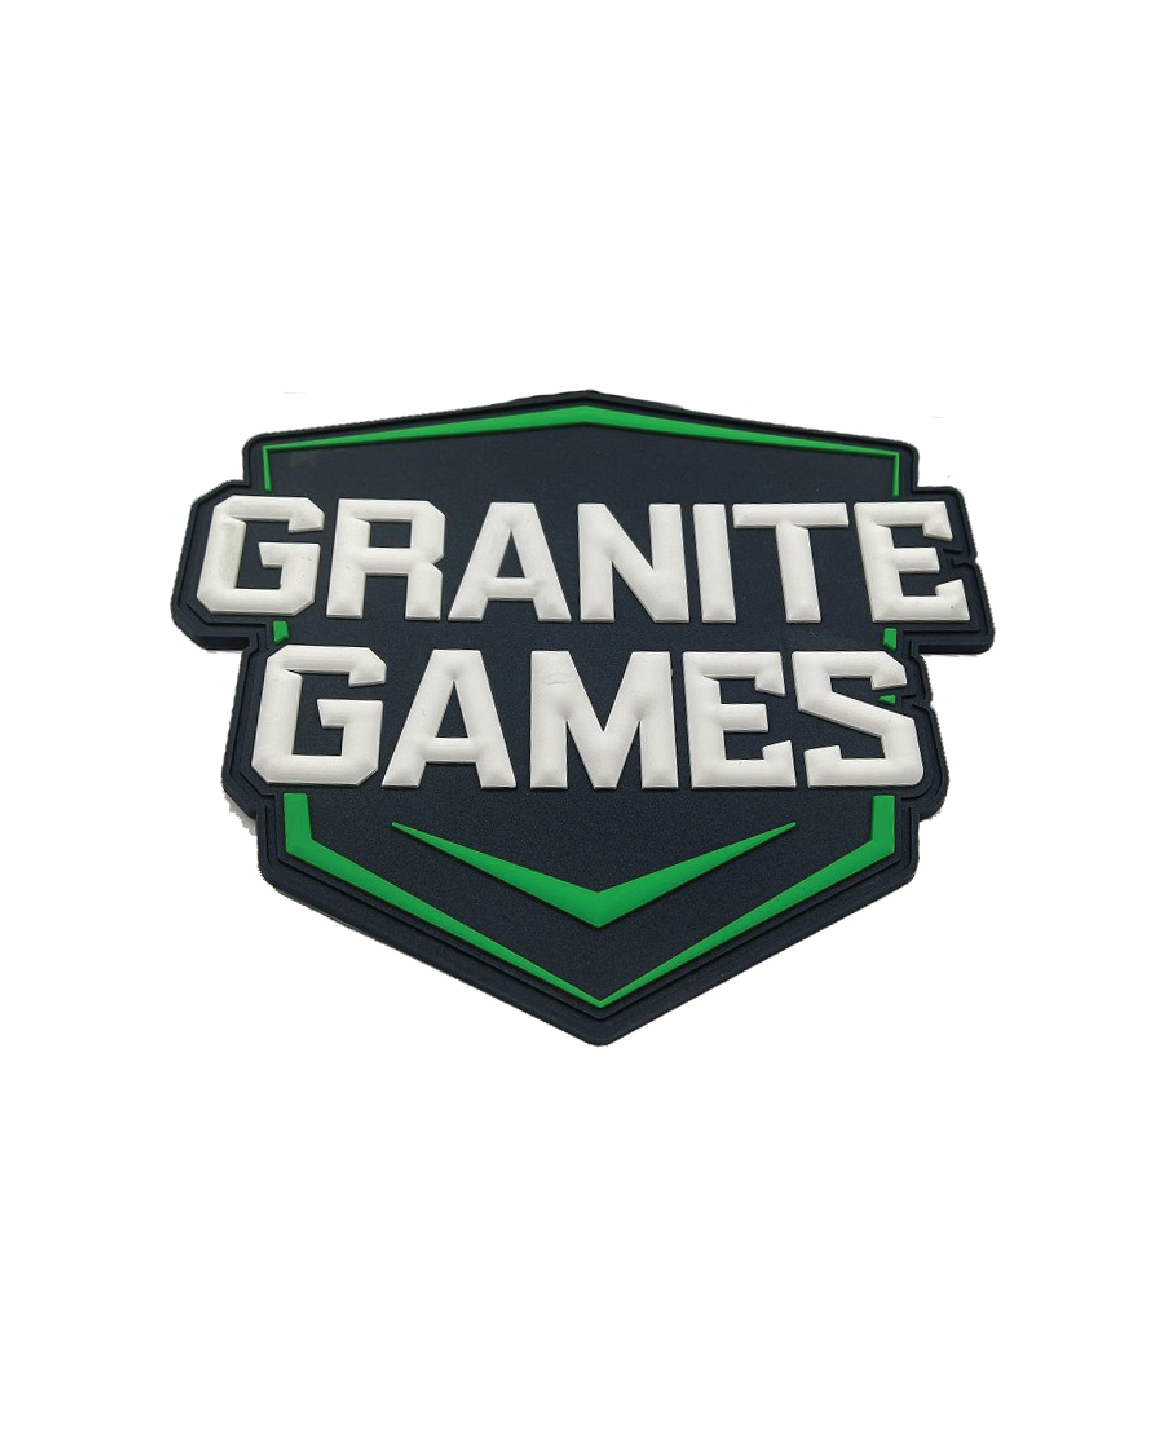 Granite Games Patch